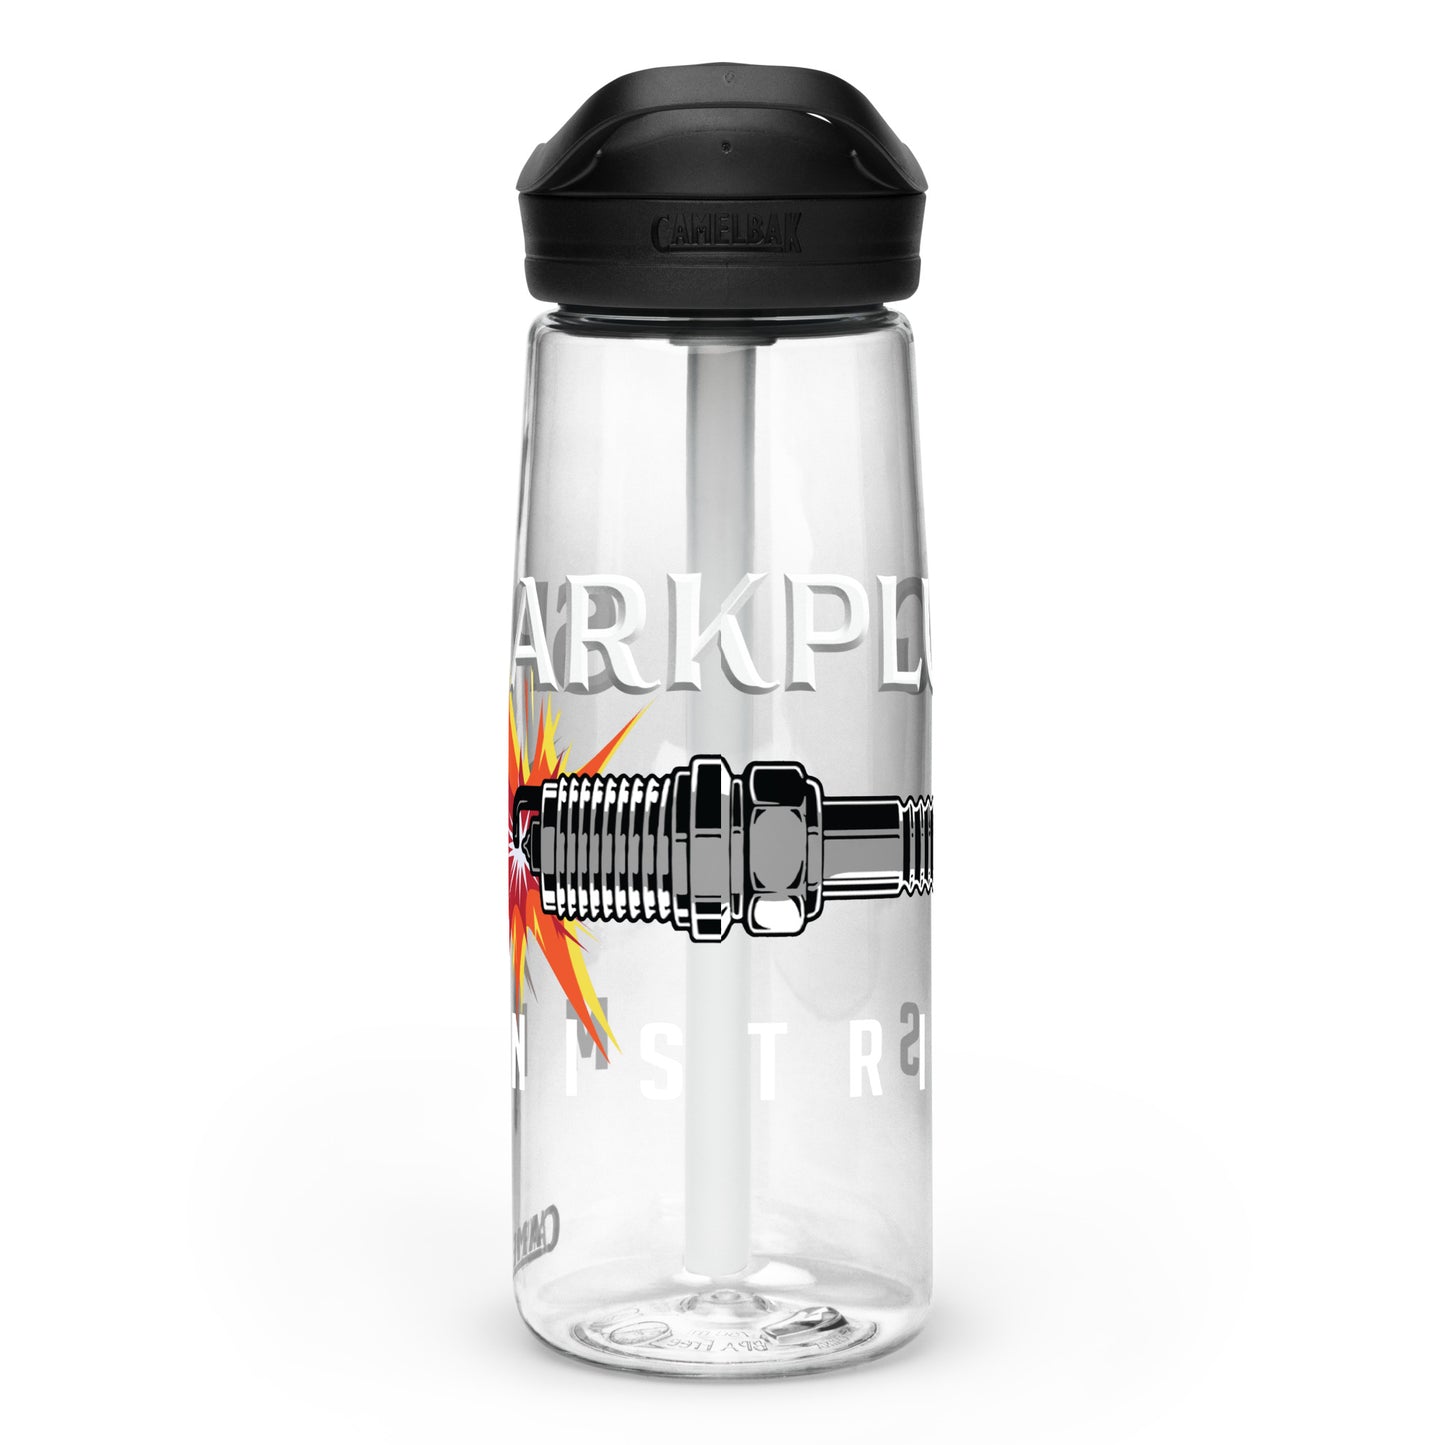 Sparkplug Sports water bottle